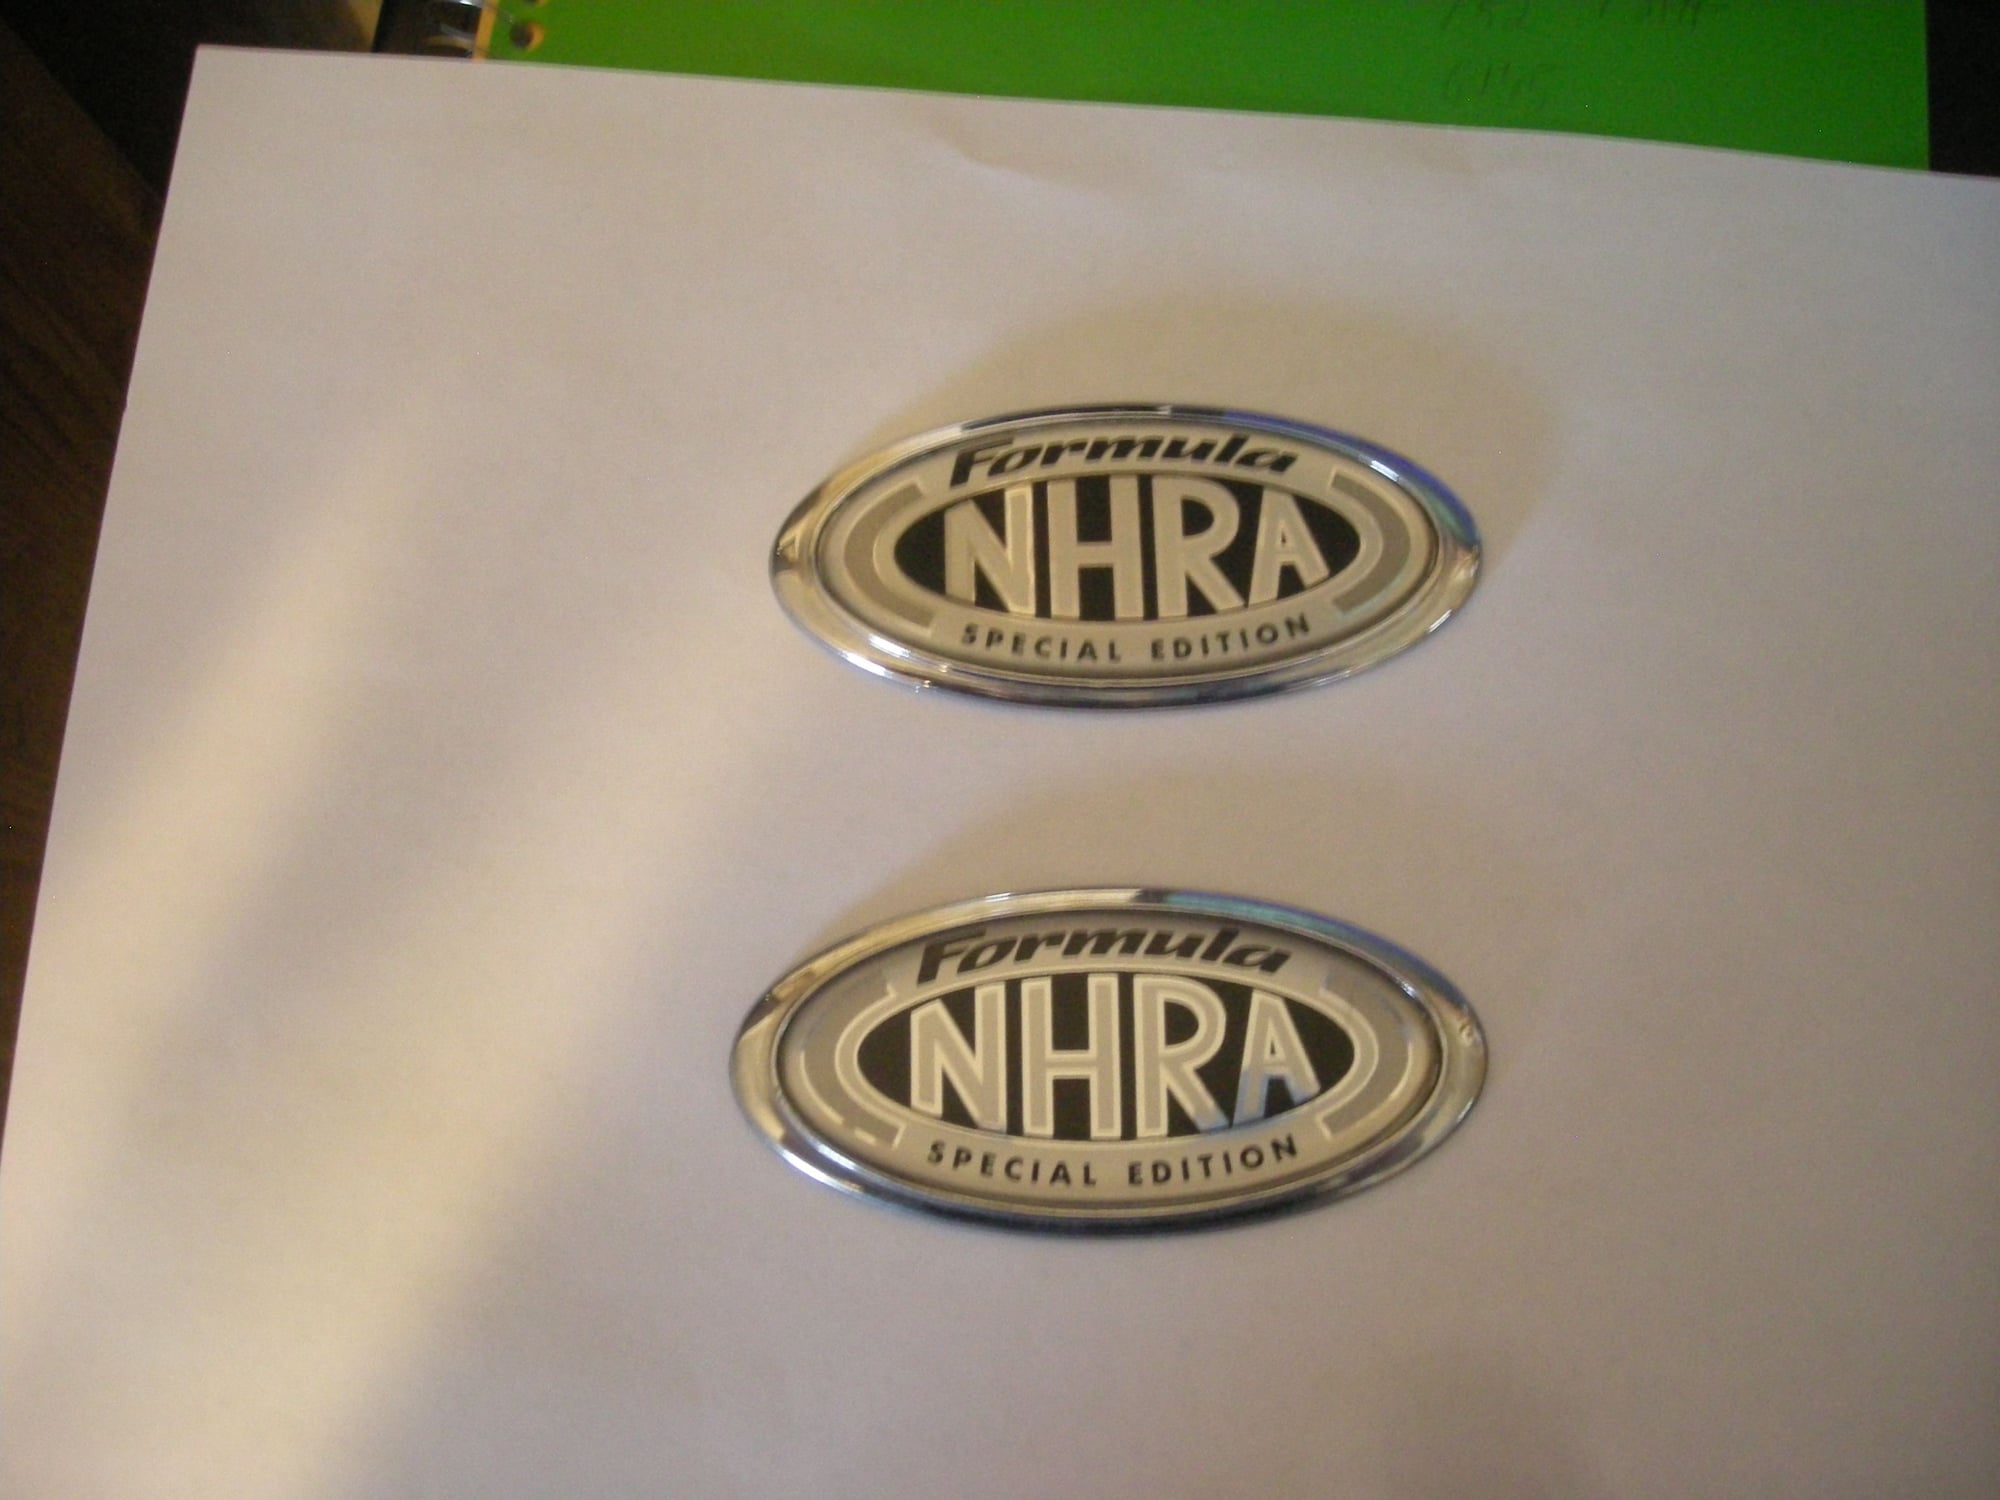  - NHRA formula special edition emblems - Hazle Township, PA 18202, United States